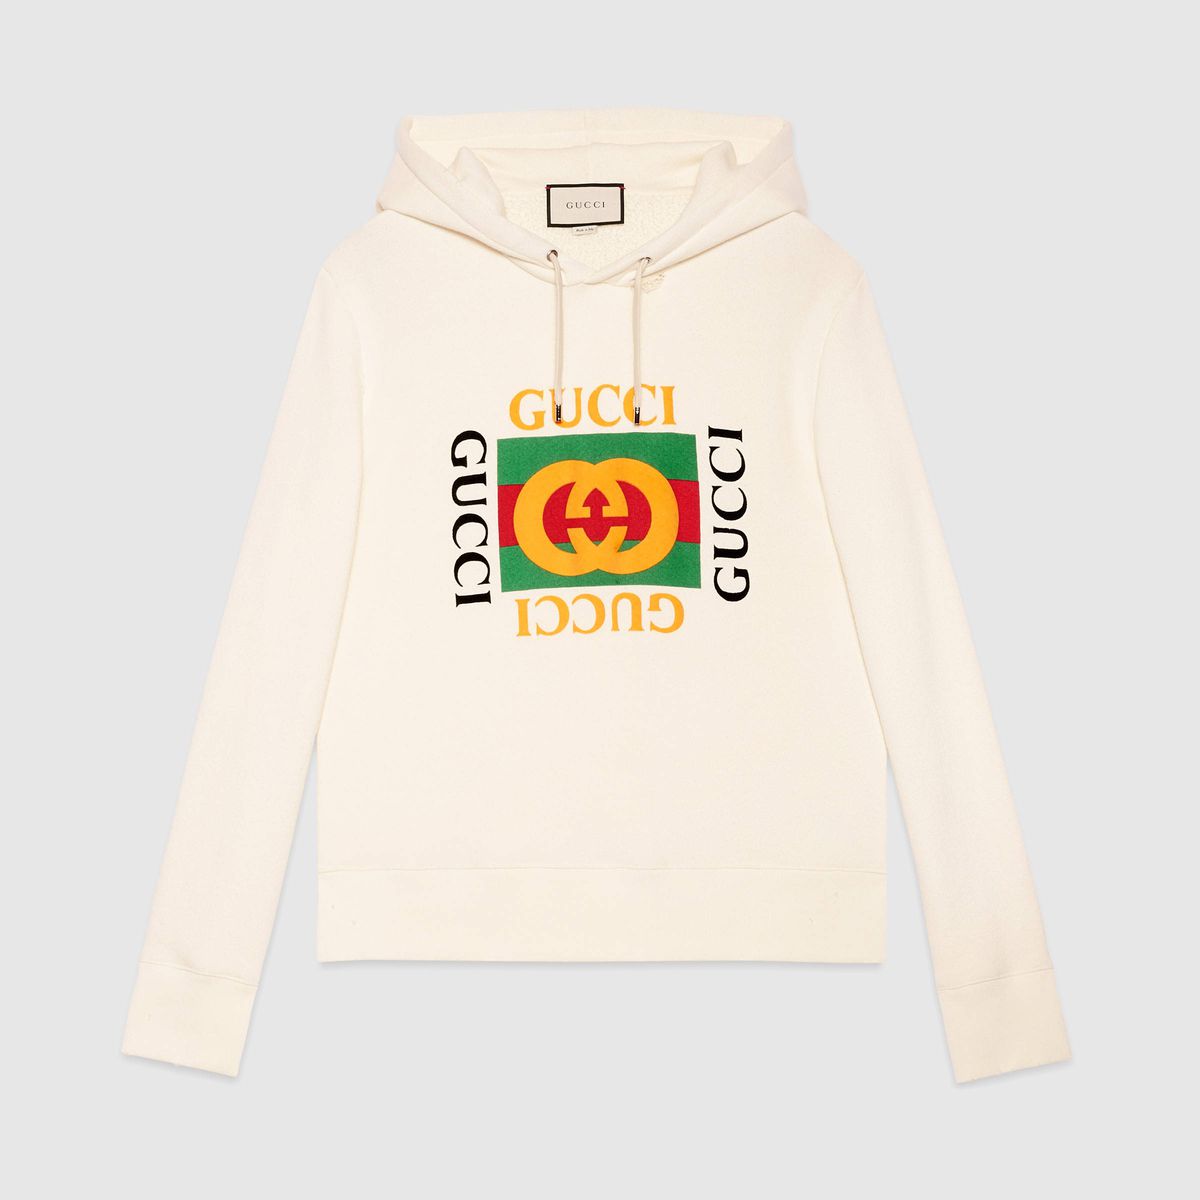 Gucci logo sweatshirt